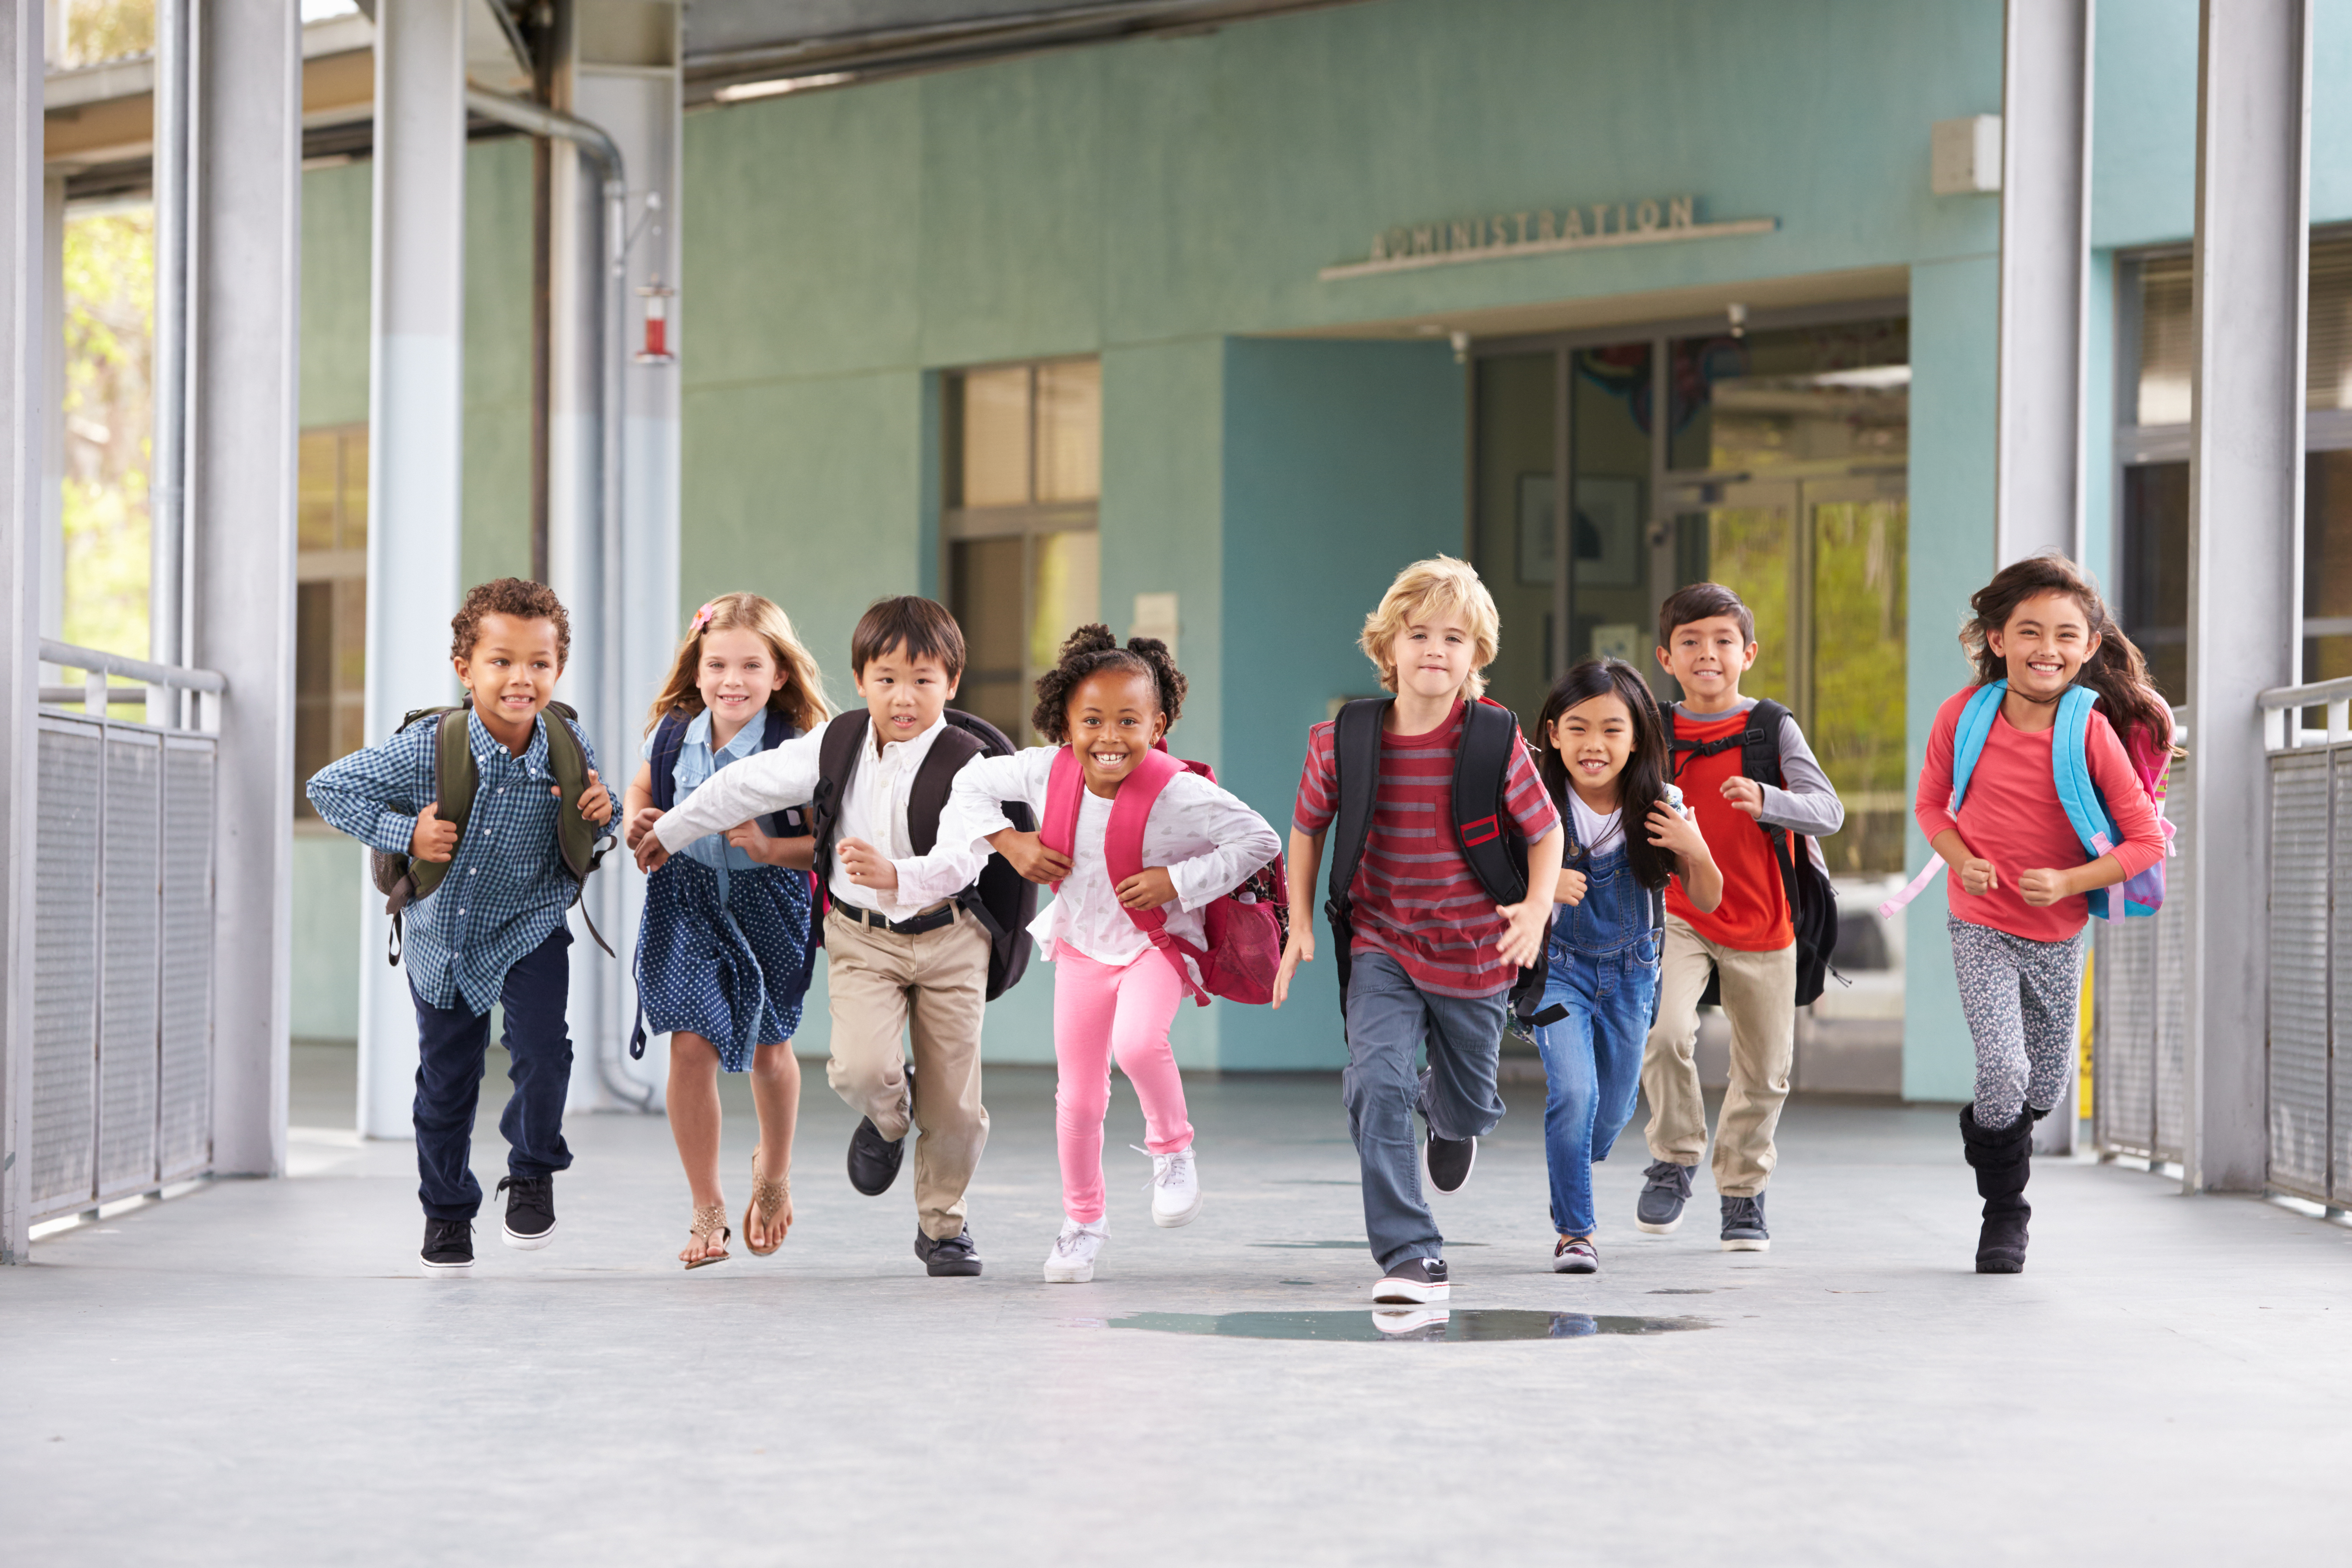 Kids with backpacks running in school